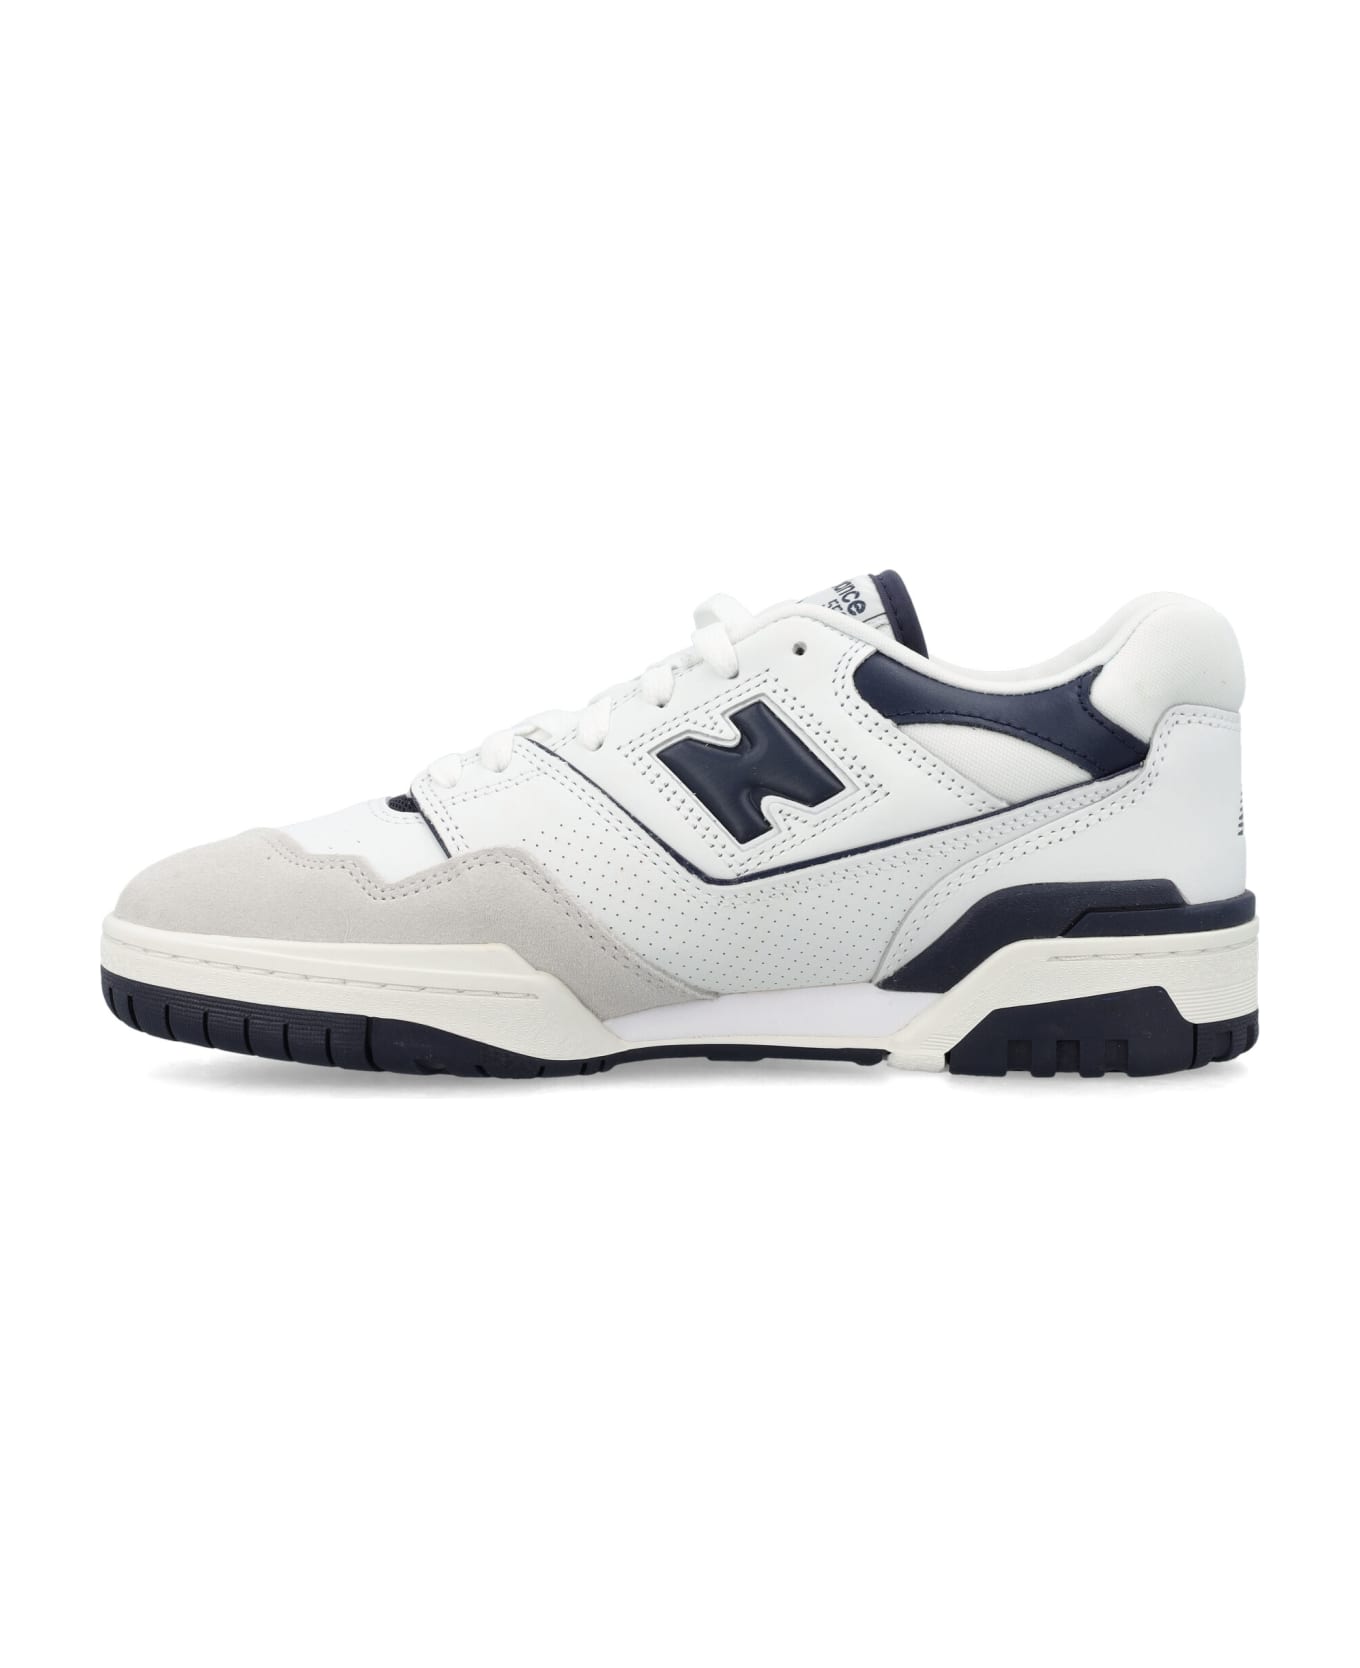 New Balance 550 Sneakers - WHITE NAVY